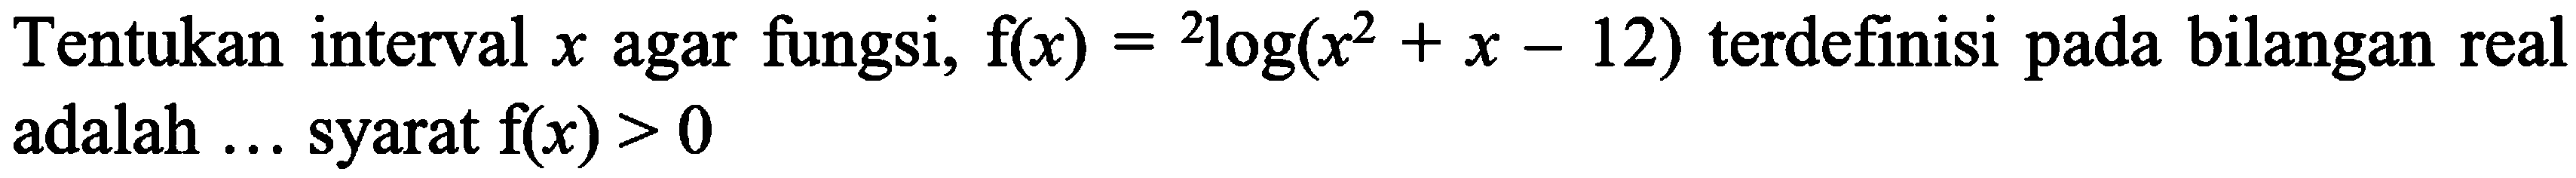 Tentukan interval x agar fungsi f(x) = 2log(x^2+x-12) terdefinisi pada bilangan real adalah ... syarat f(x)>0